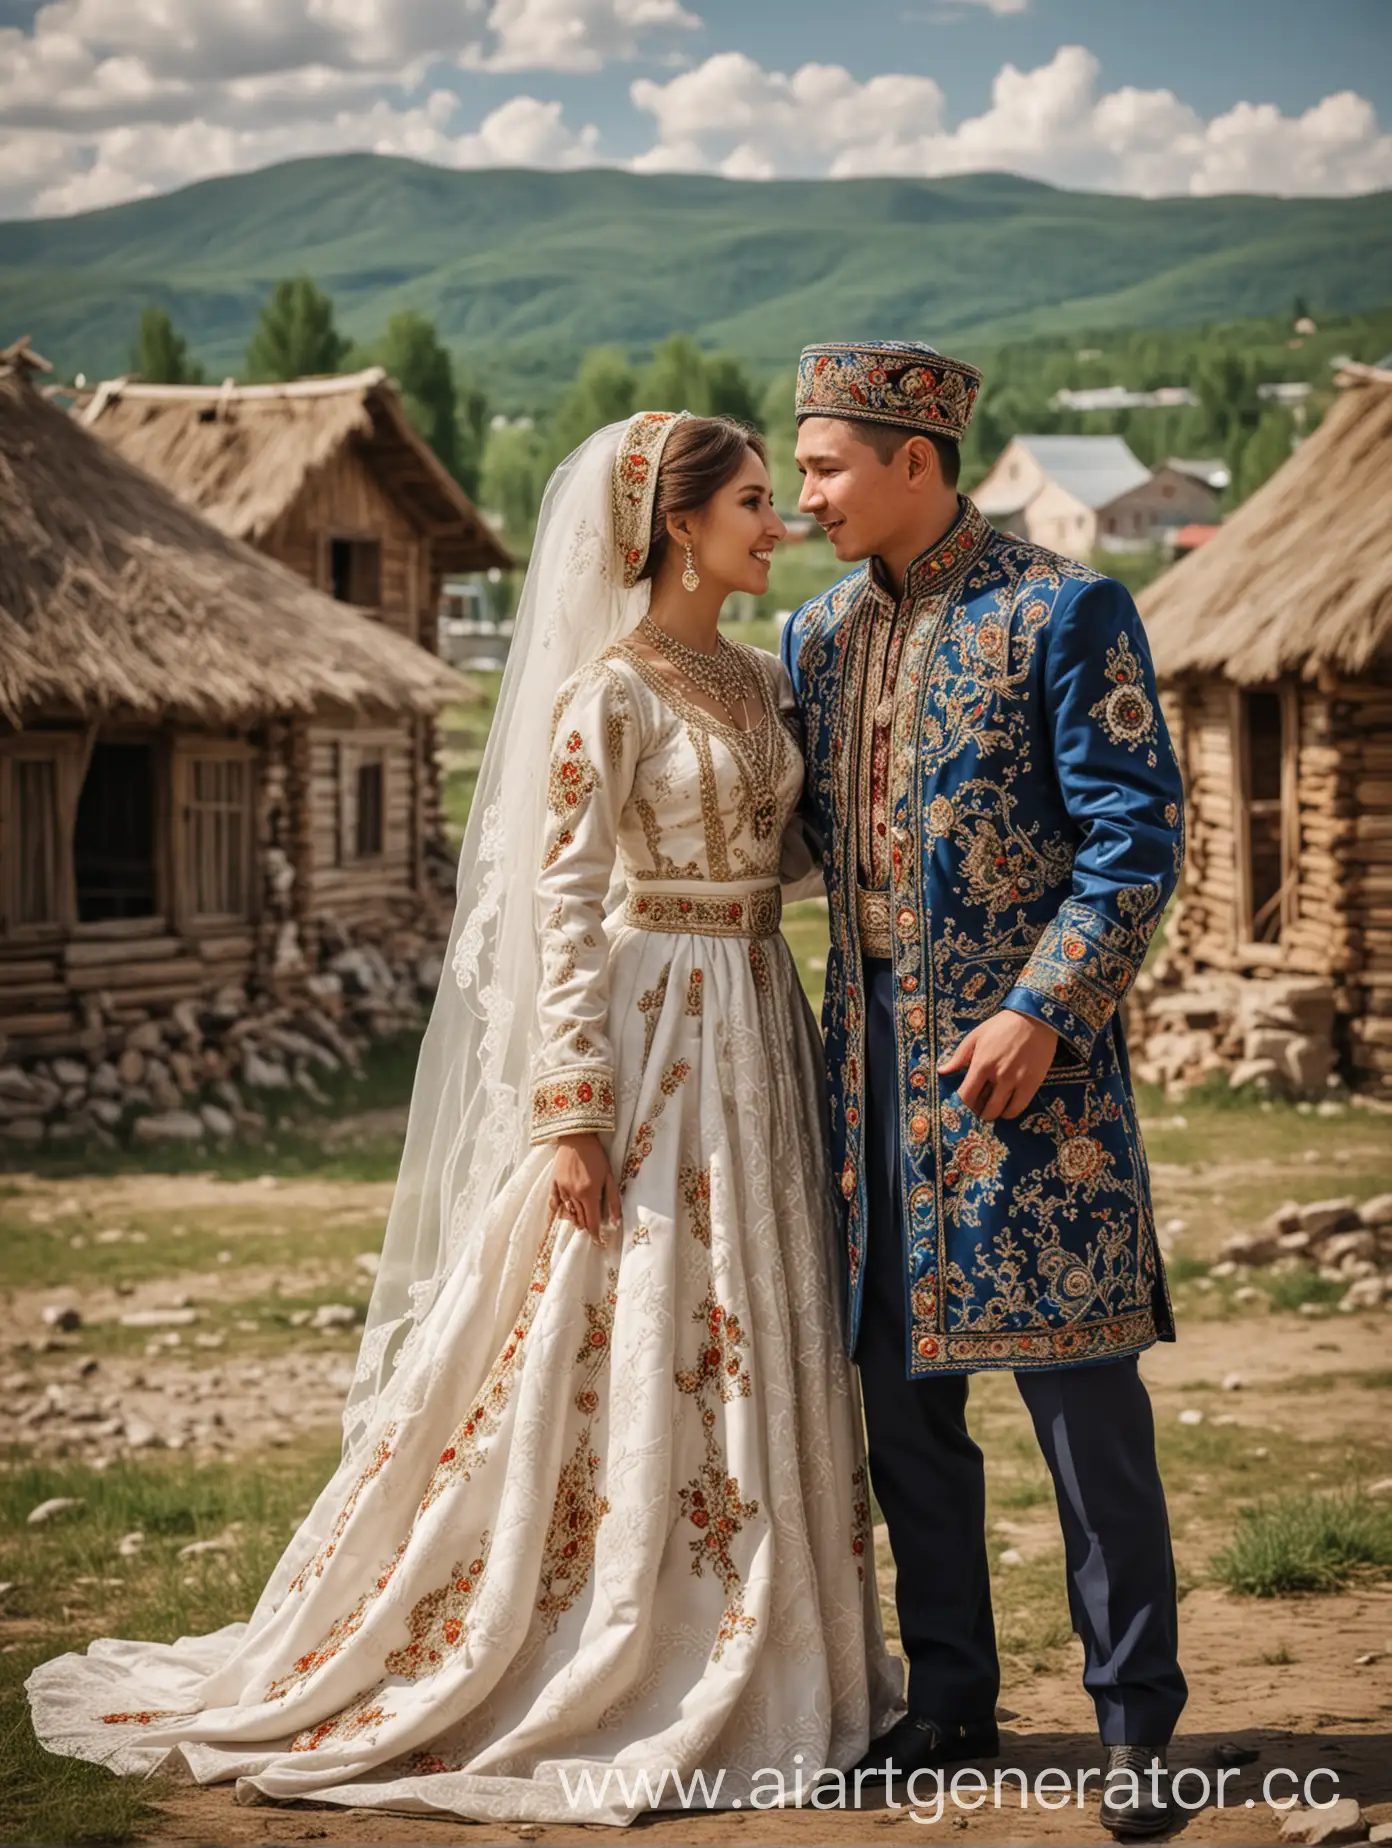 Bashkir-Wedding-Ceremony-Groom-and-Bride-in-Village-Setting